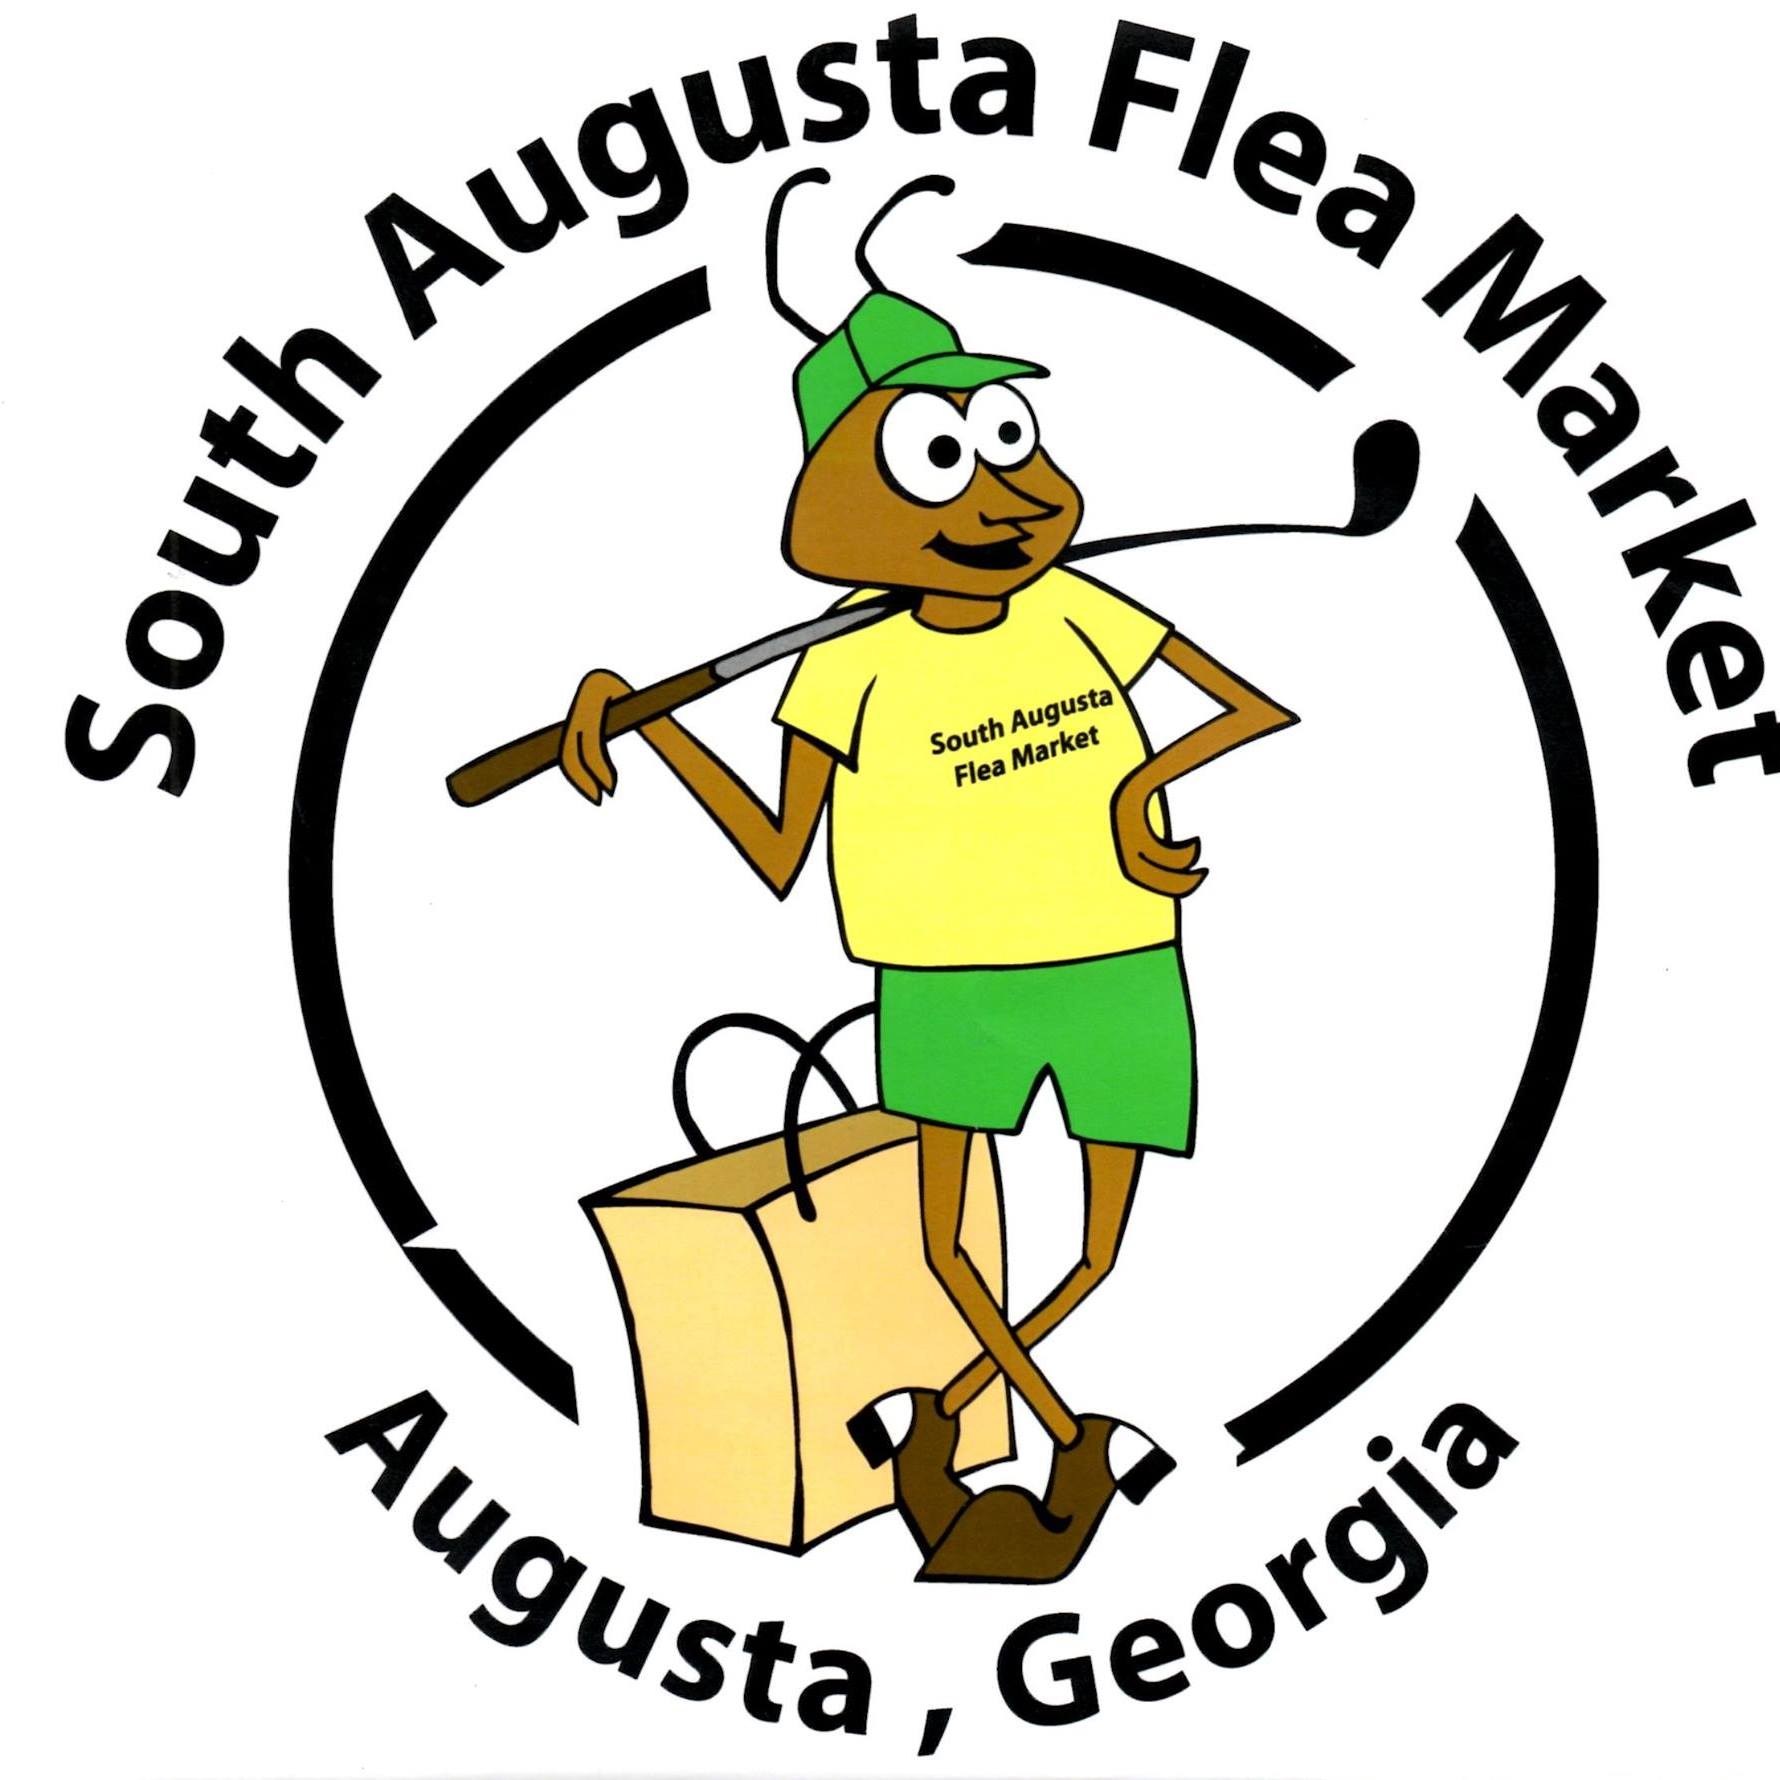 Company logo of South Augusta Flea Market